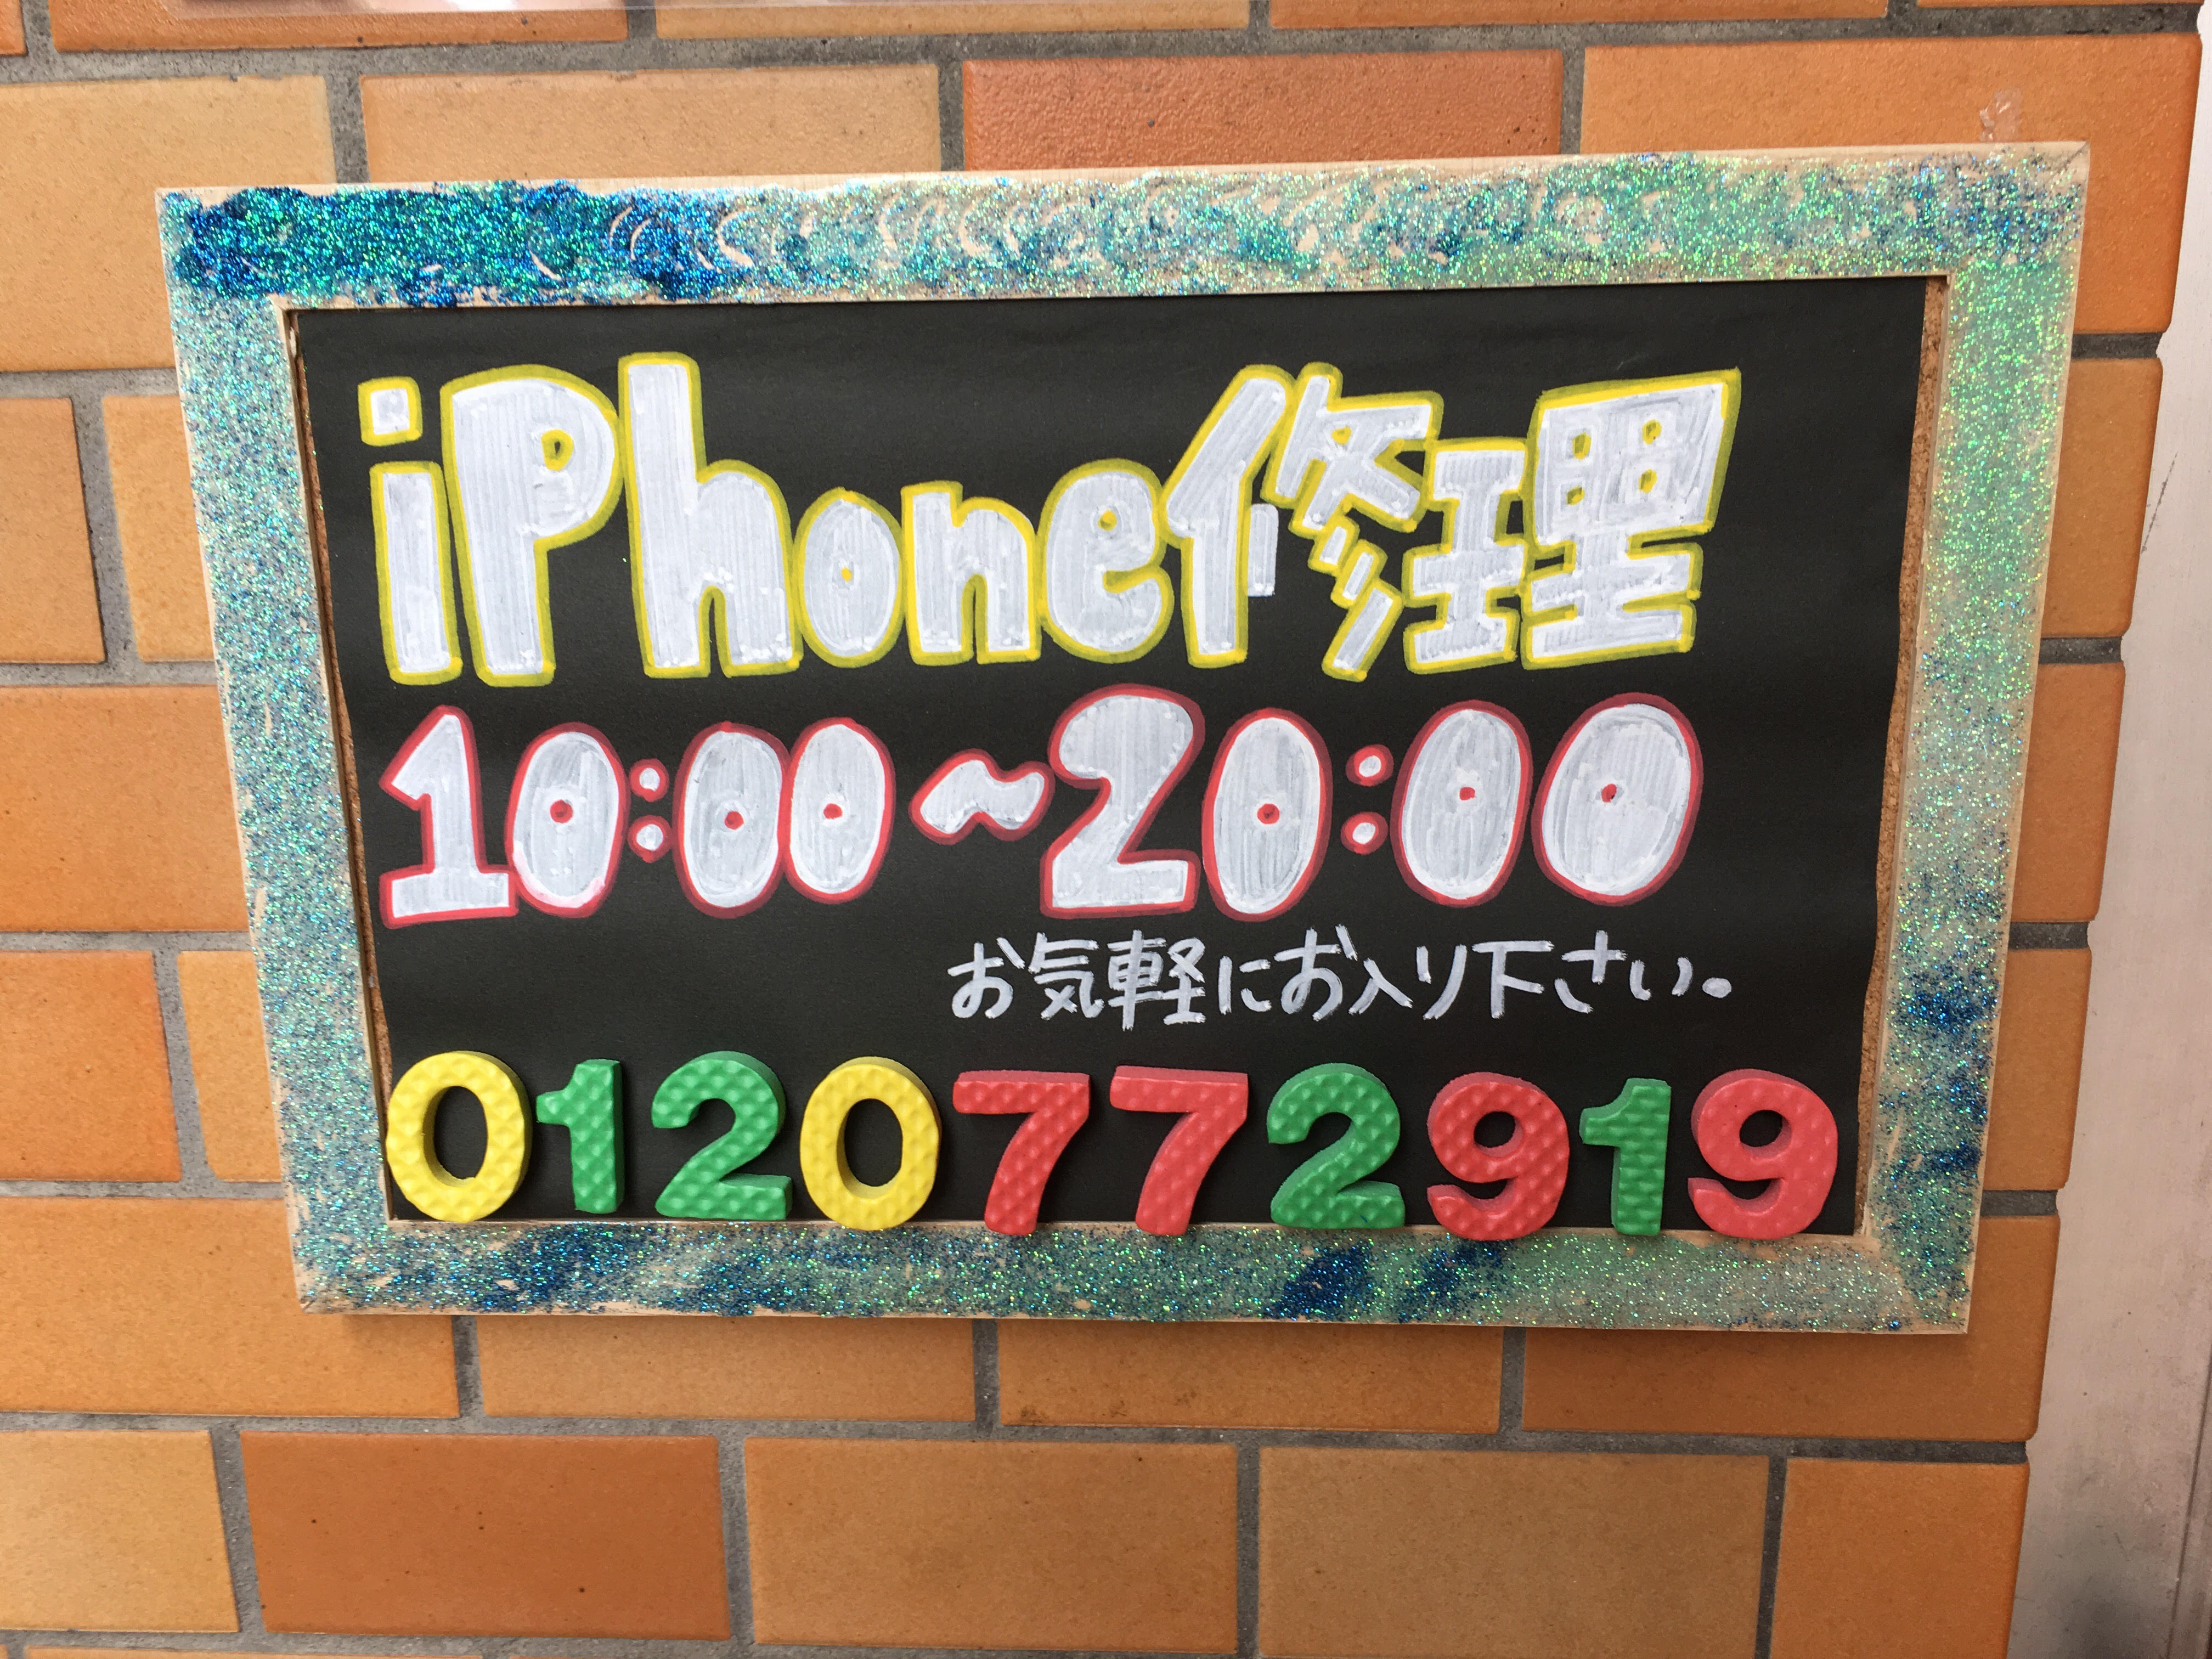 http://iphonequick.com/yamato/iPhone.jpg